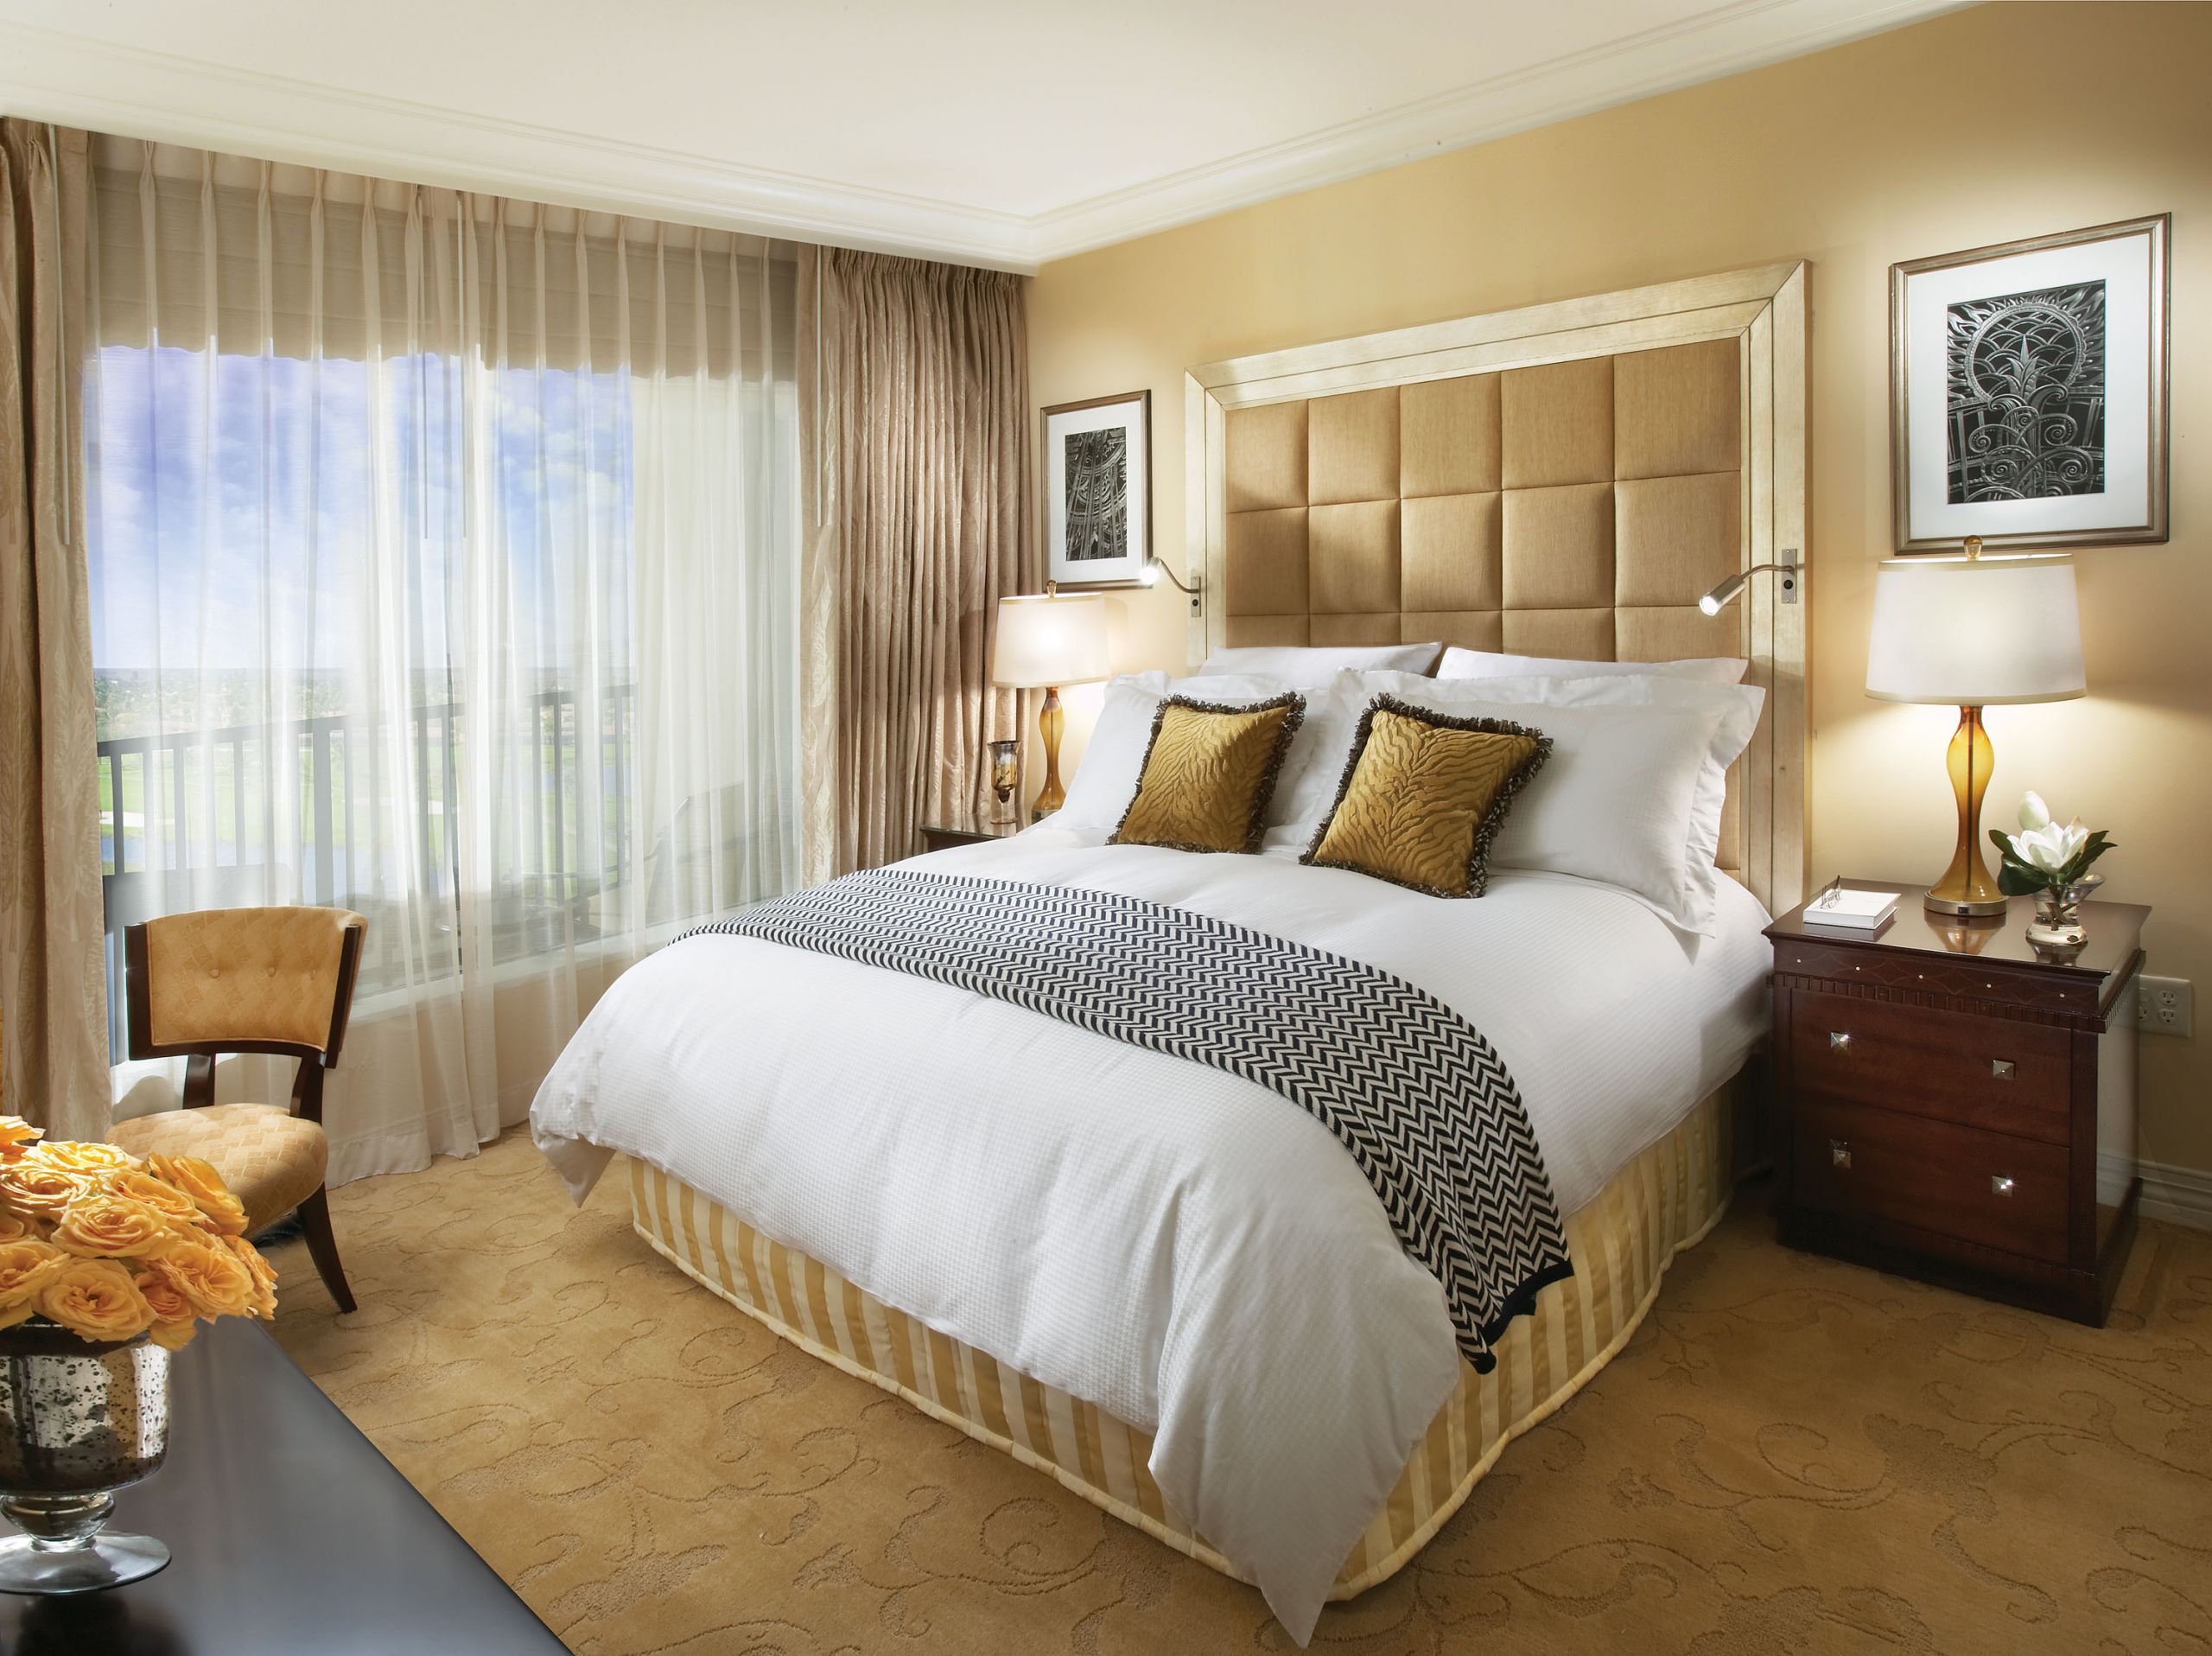 Cute Bedroom Decor
 Cute Bedroom Ideas Classical Decorations Versus Modern Design